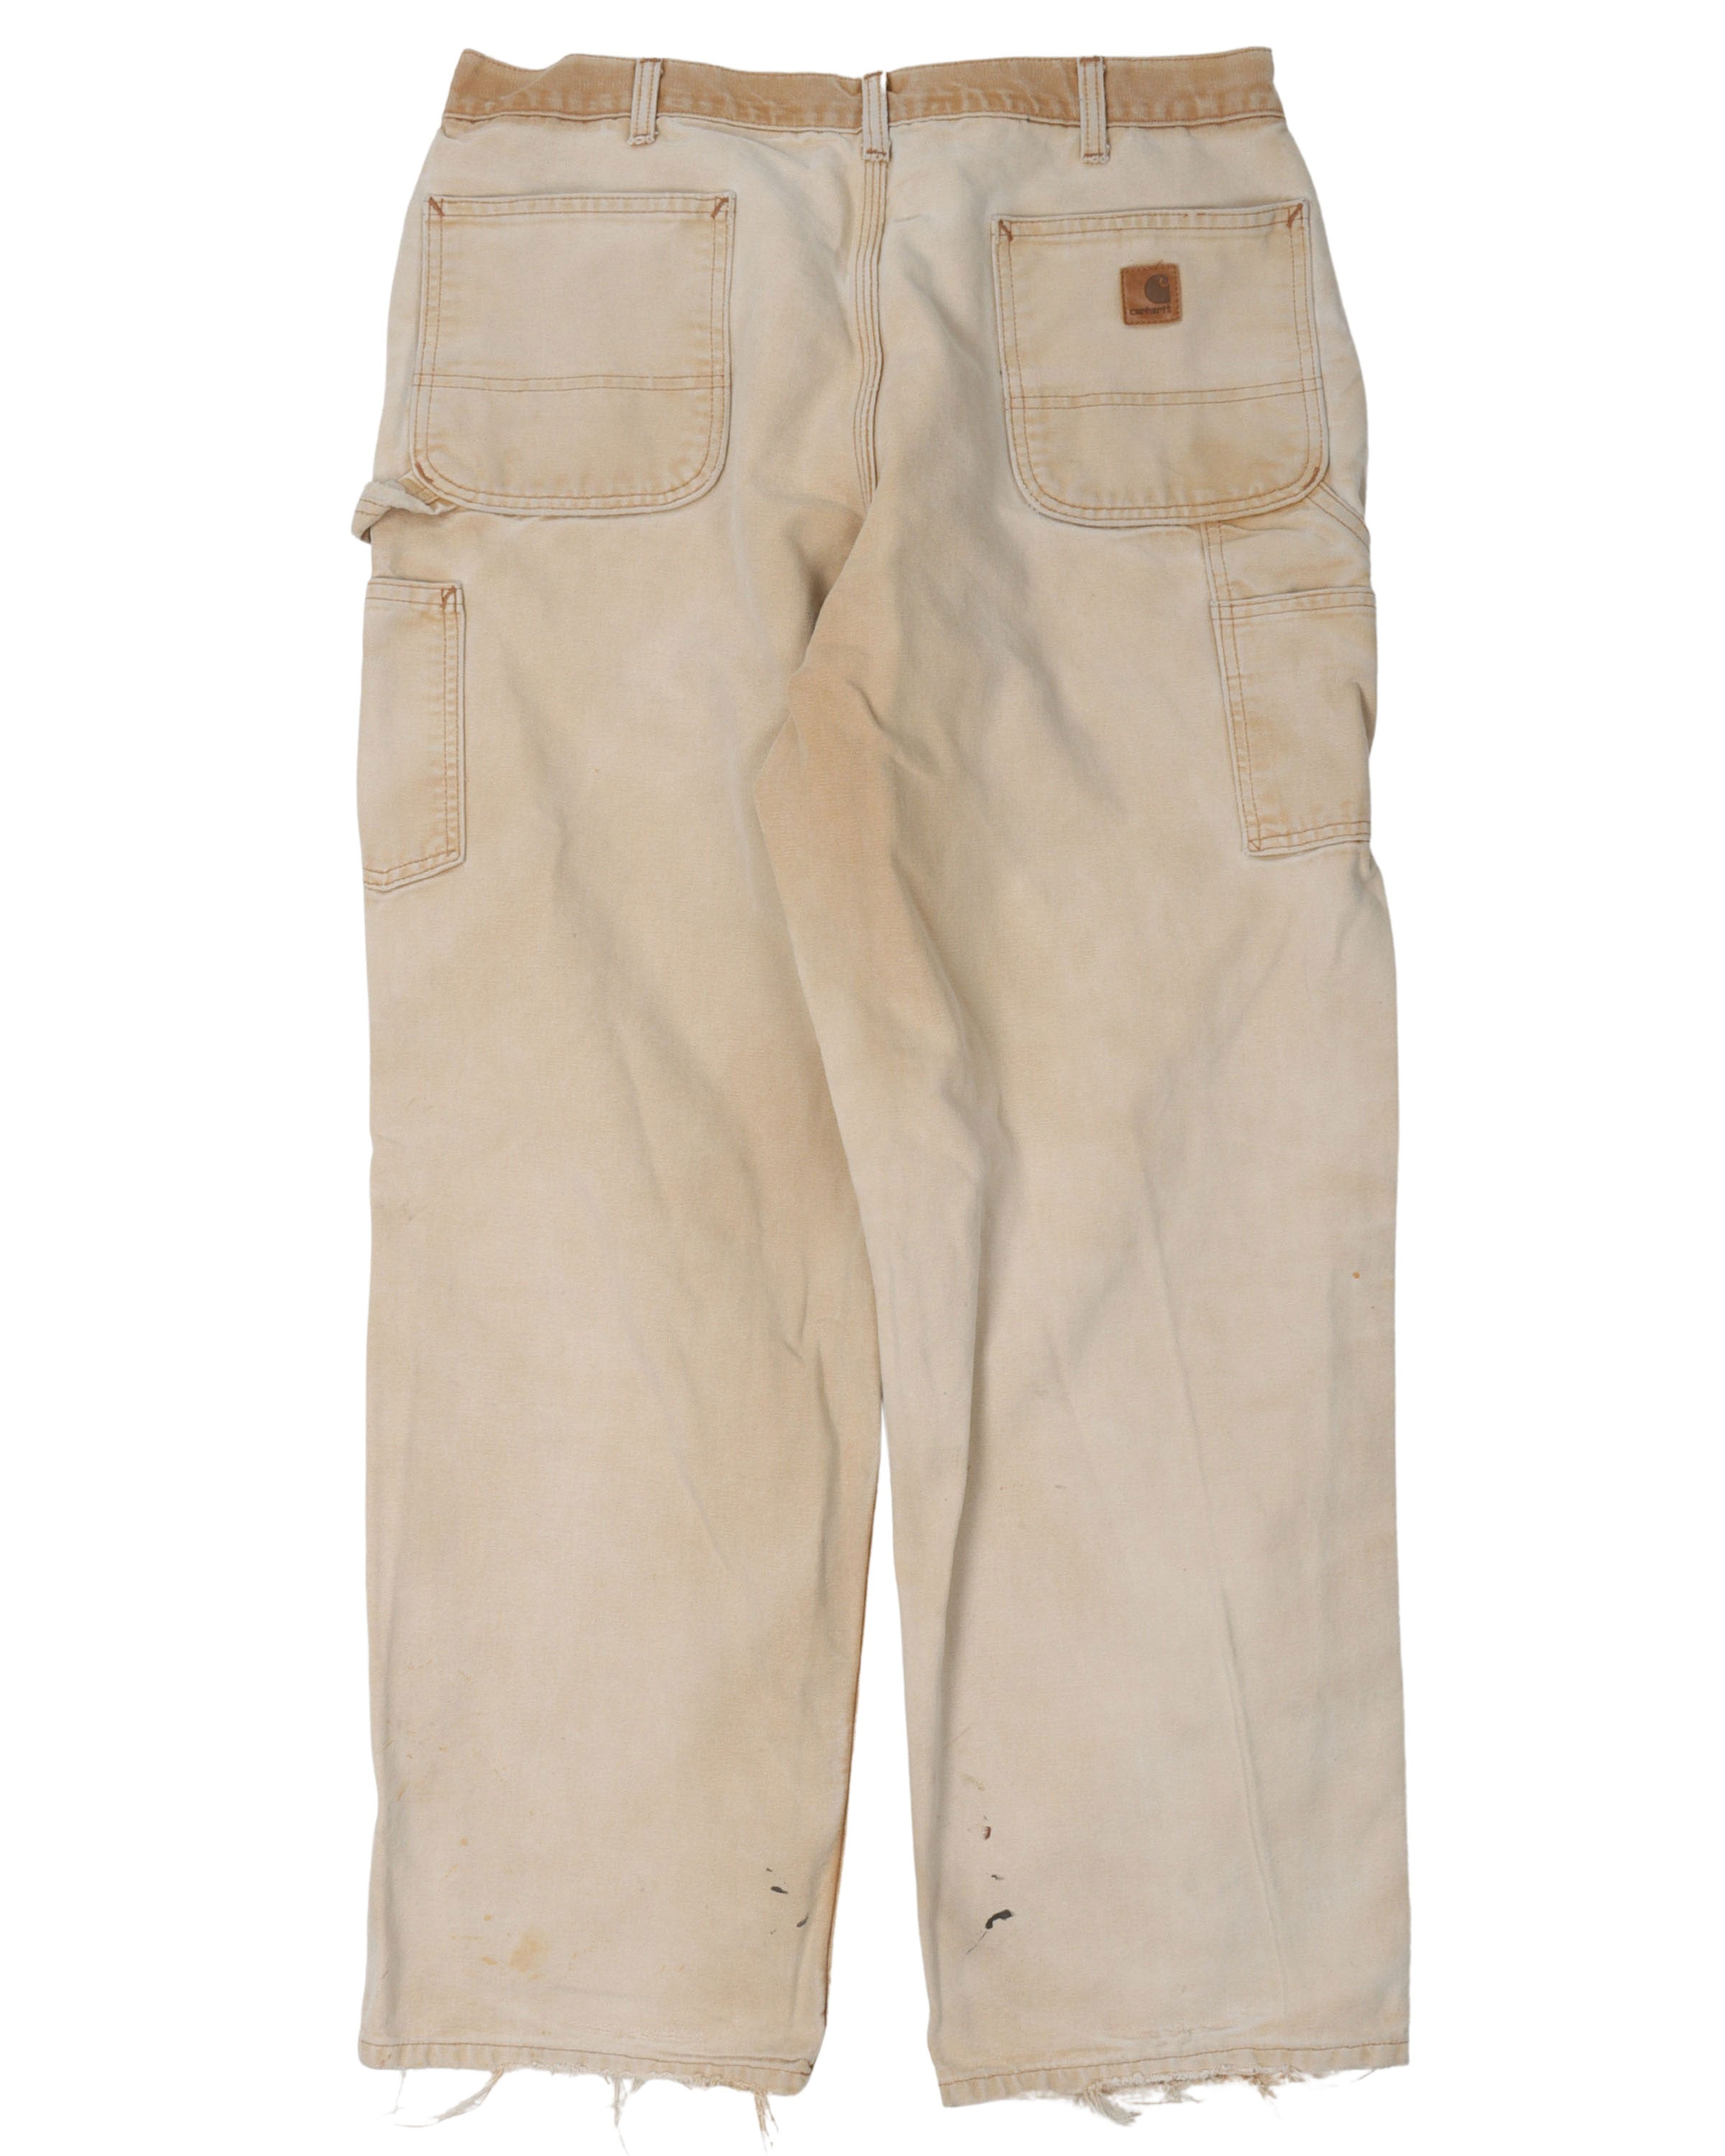 Carhartt Carpenter Pants Relaxed Fit in Khaki Tan Work Jeans Mens Size  36-36 EUC | eBay